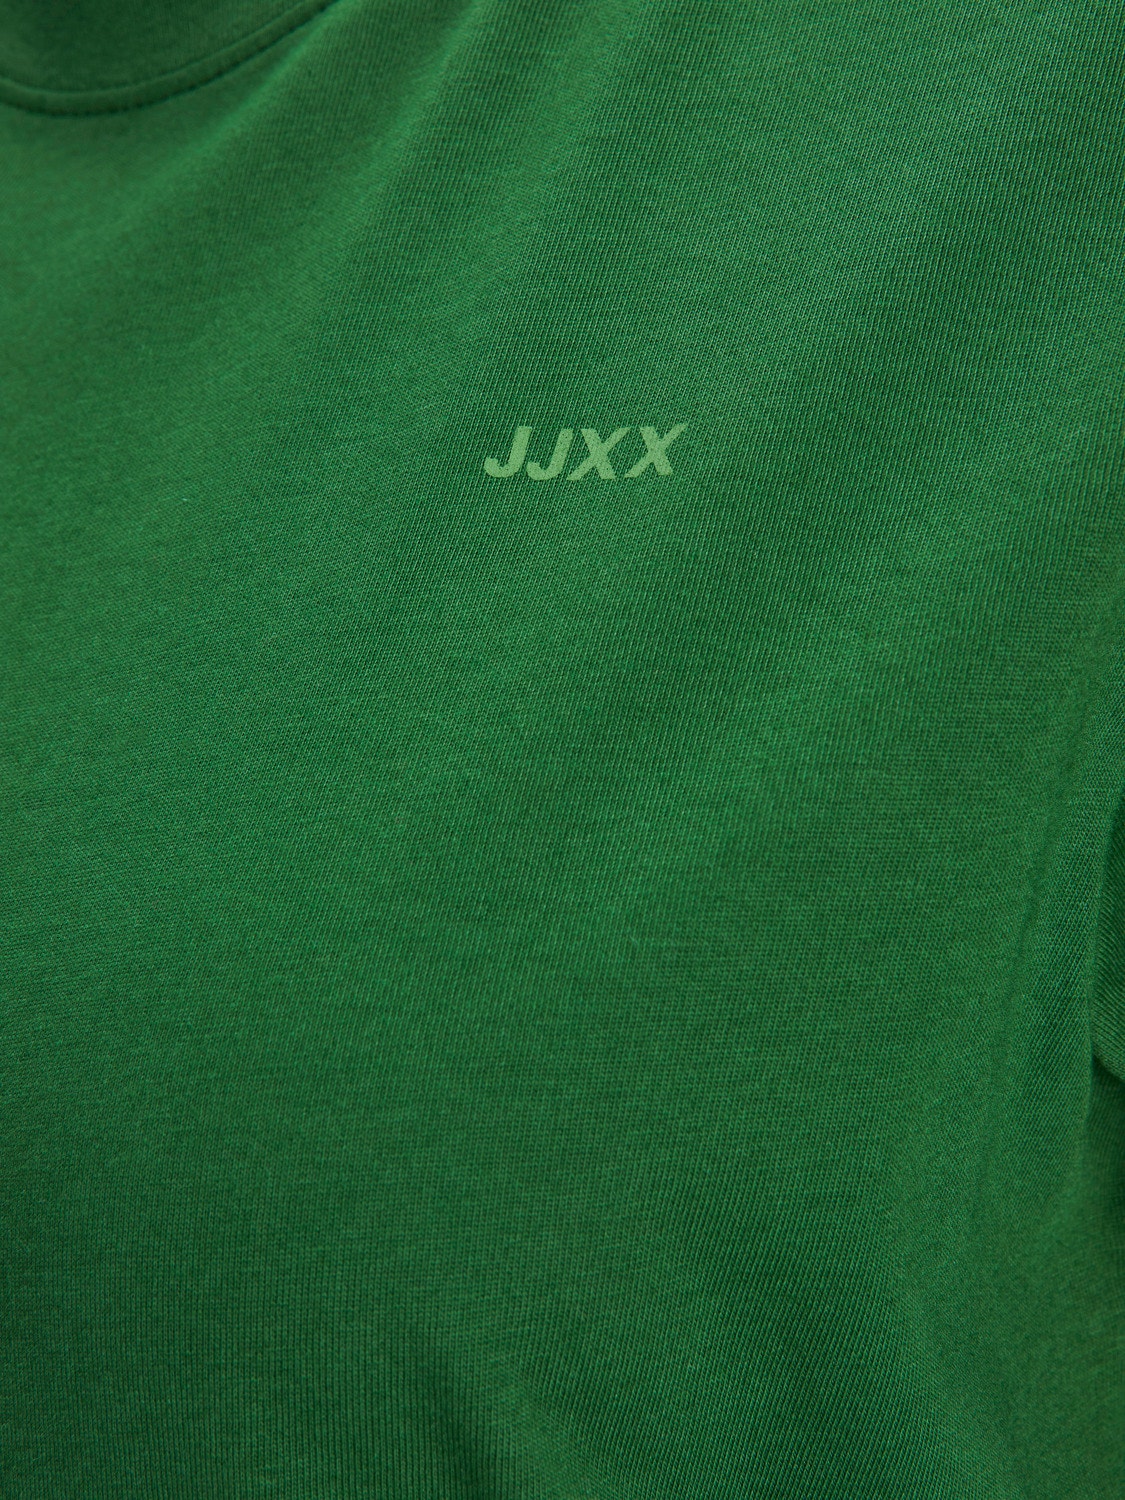 JJXX JXANNA Camiseta -Formal Garden - 12206974